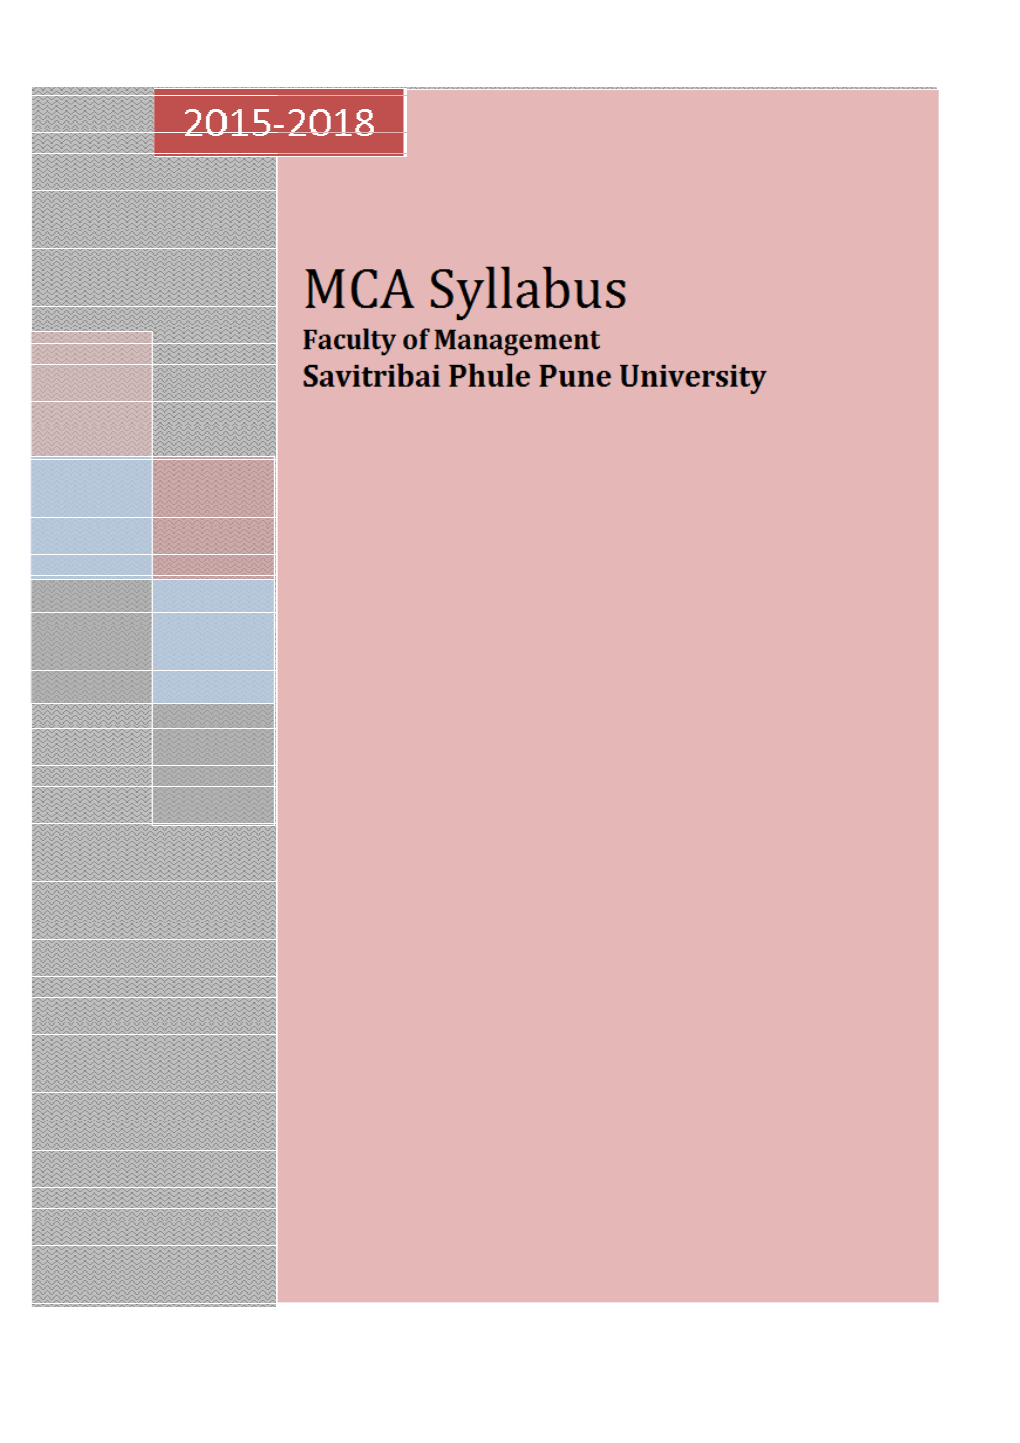 MCA Syllabus 2015-2018